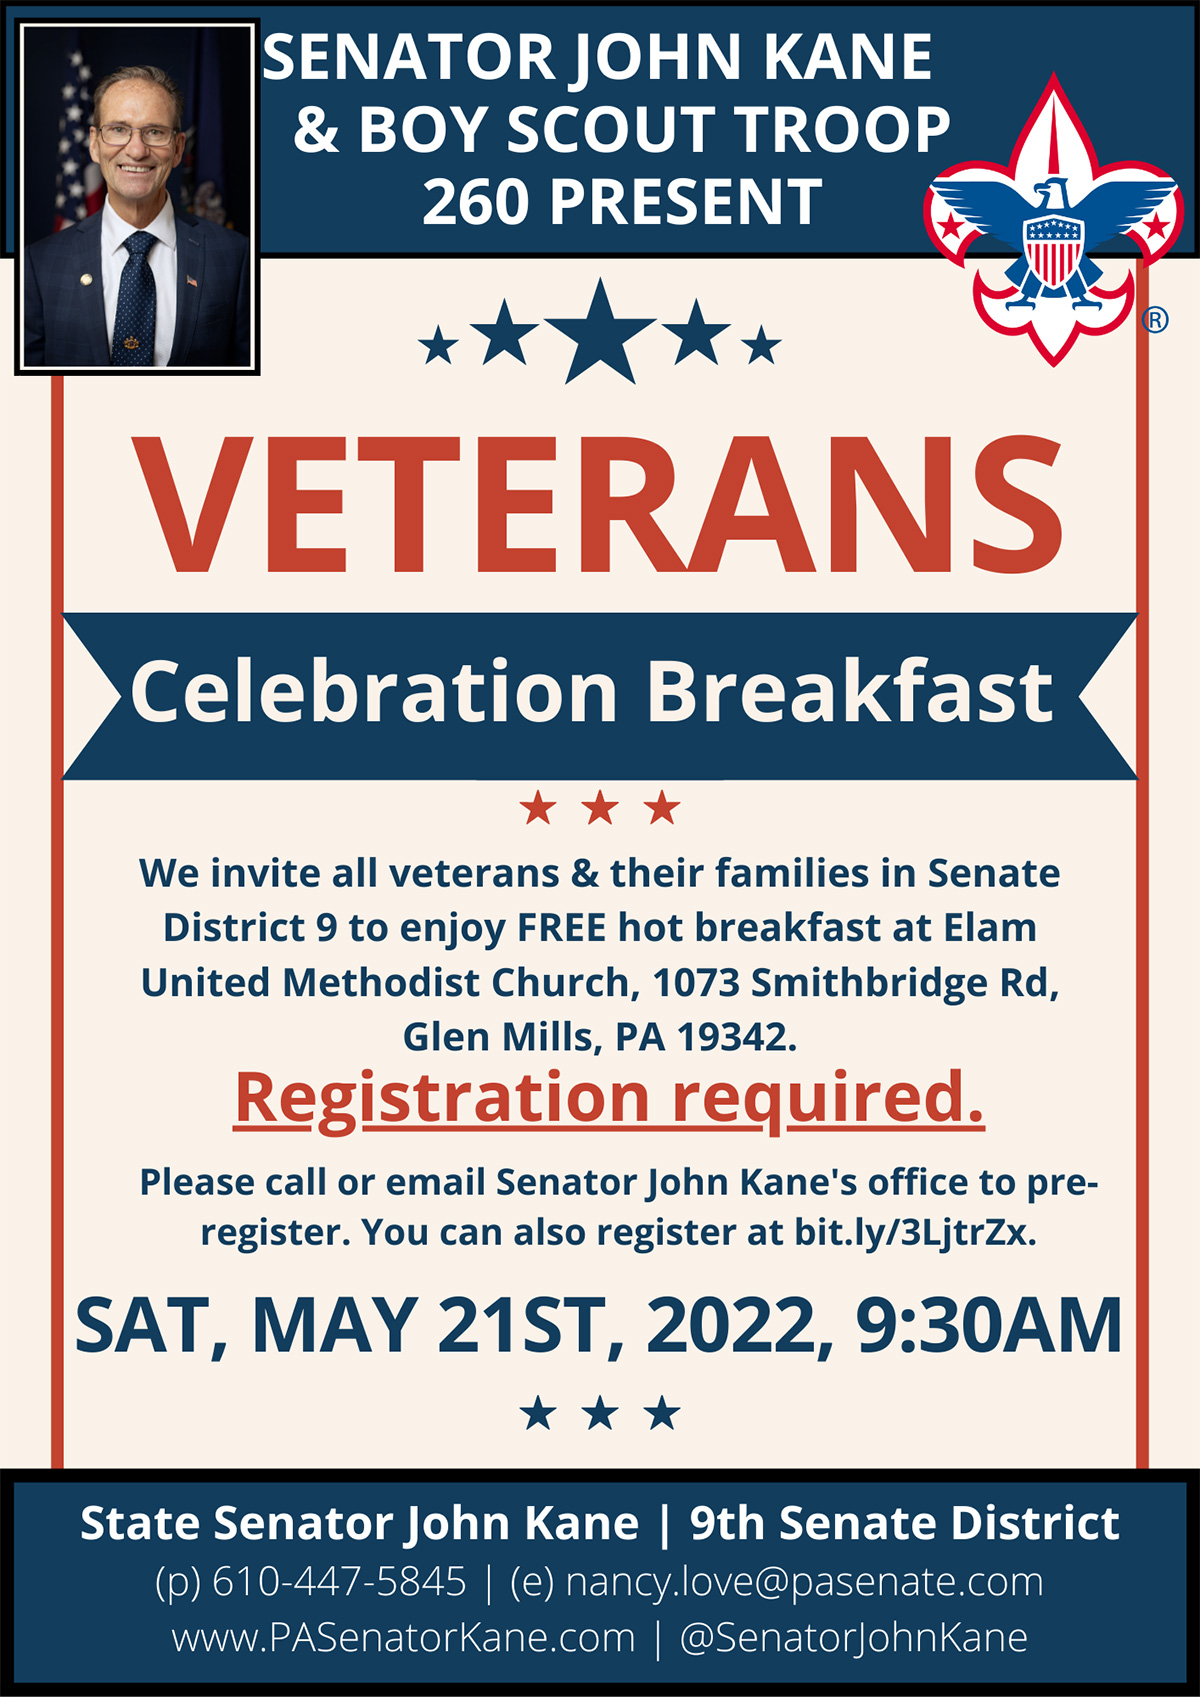 Veteran's Celebration Breakfast - May 21, 2022